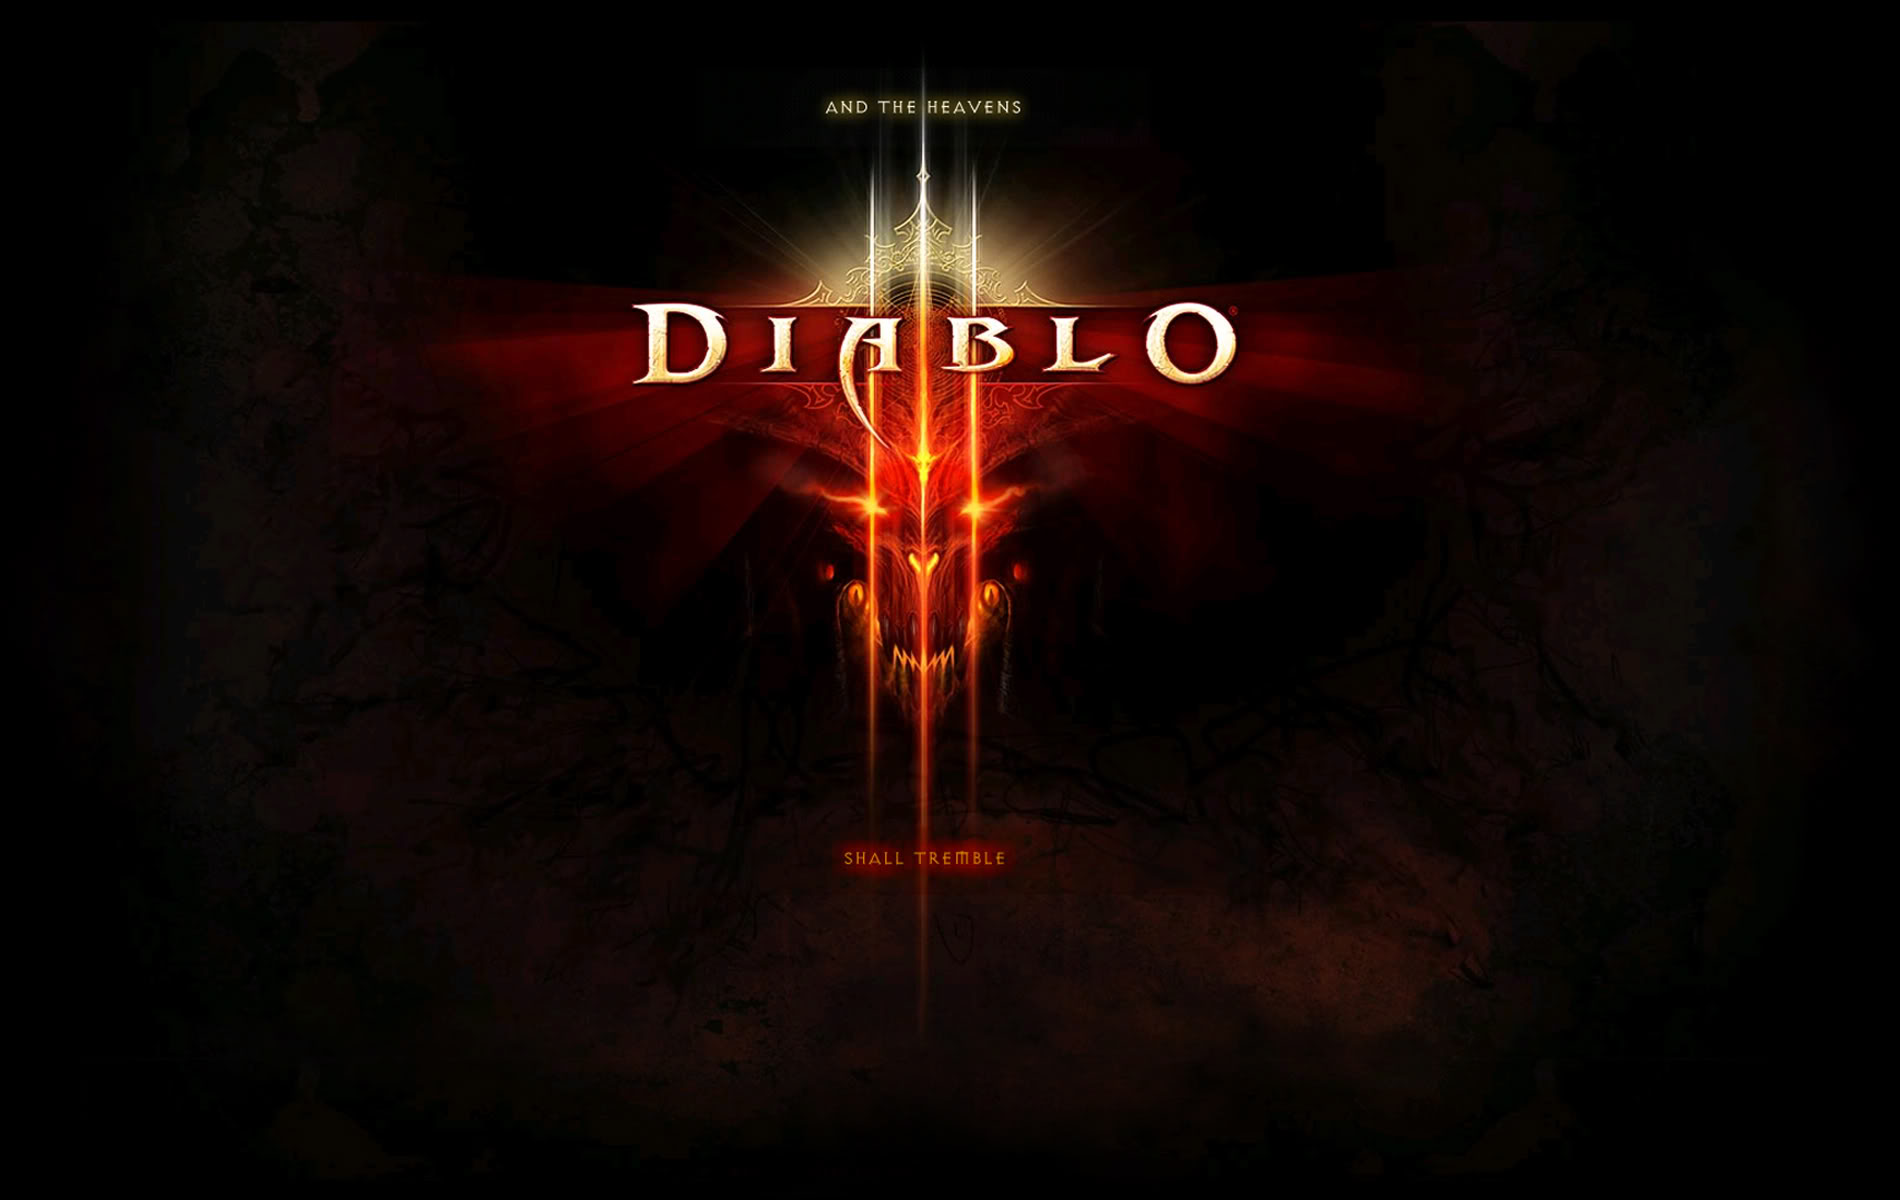 Diablo III video game wallpaper. A menacing Diablo logo in dark shades and fiery background.